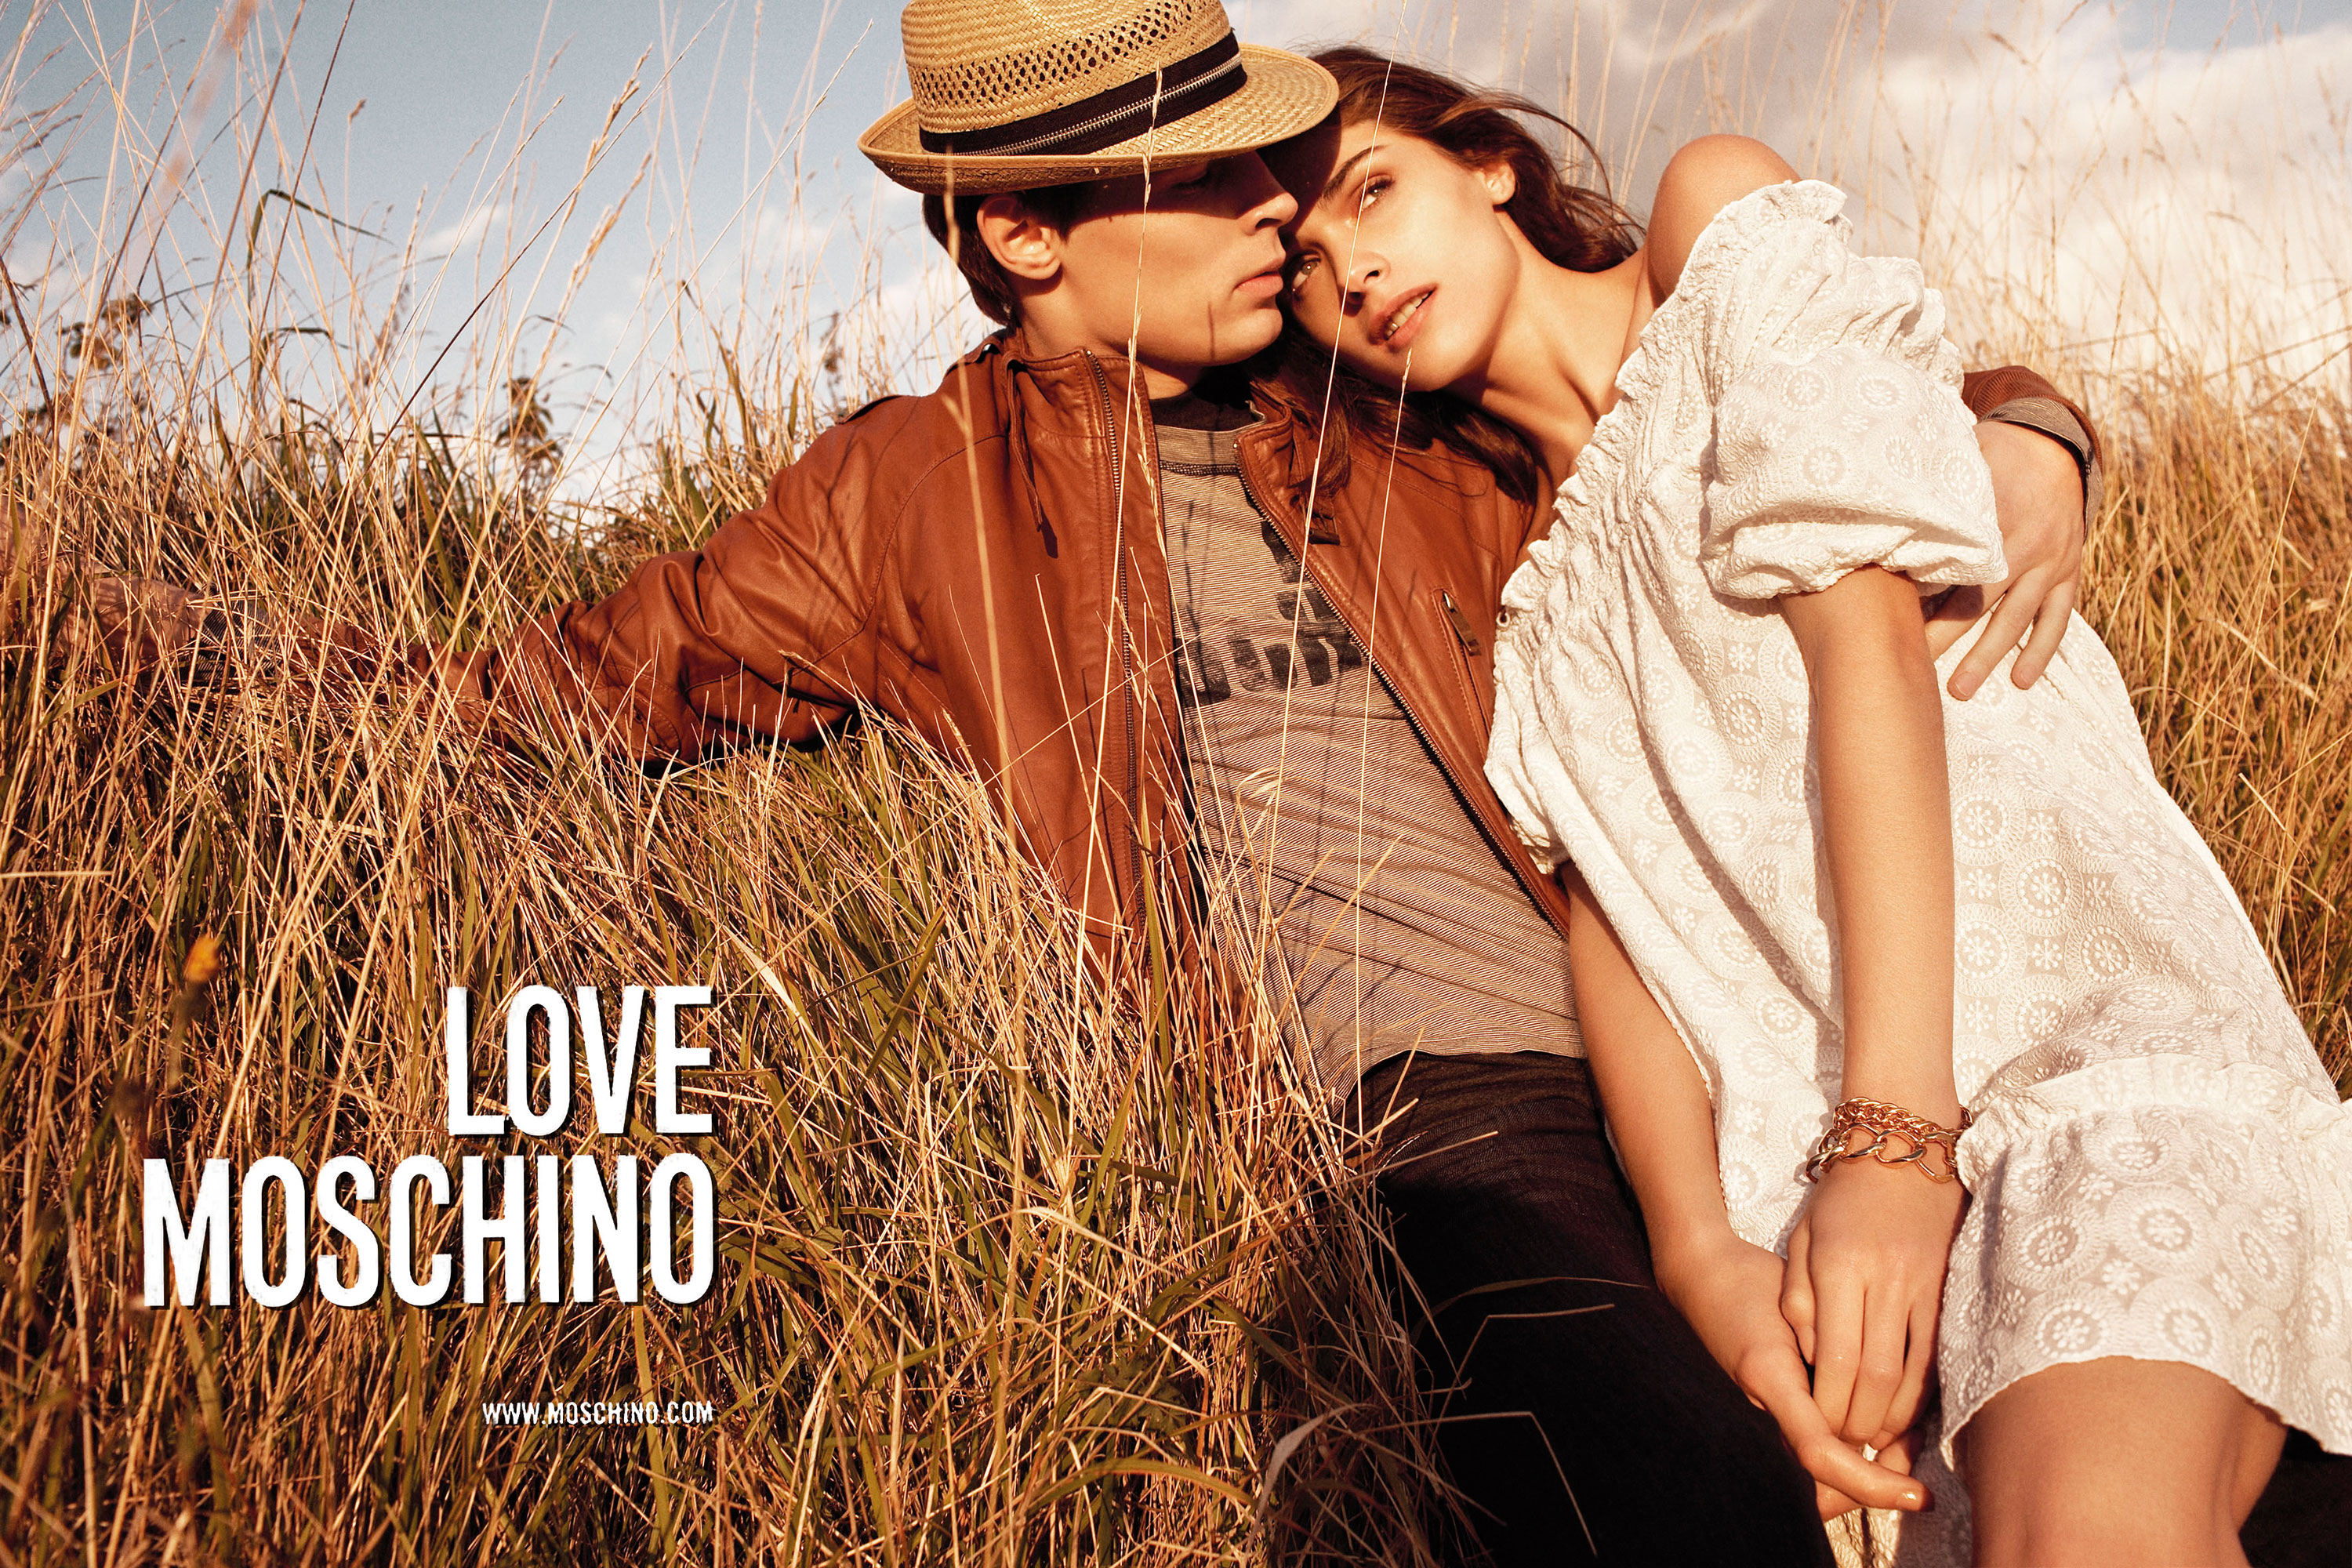 Love Moschino SS 2009 | Tom Munro | Moschino | Numerique Retouch Photo Retouching Studio